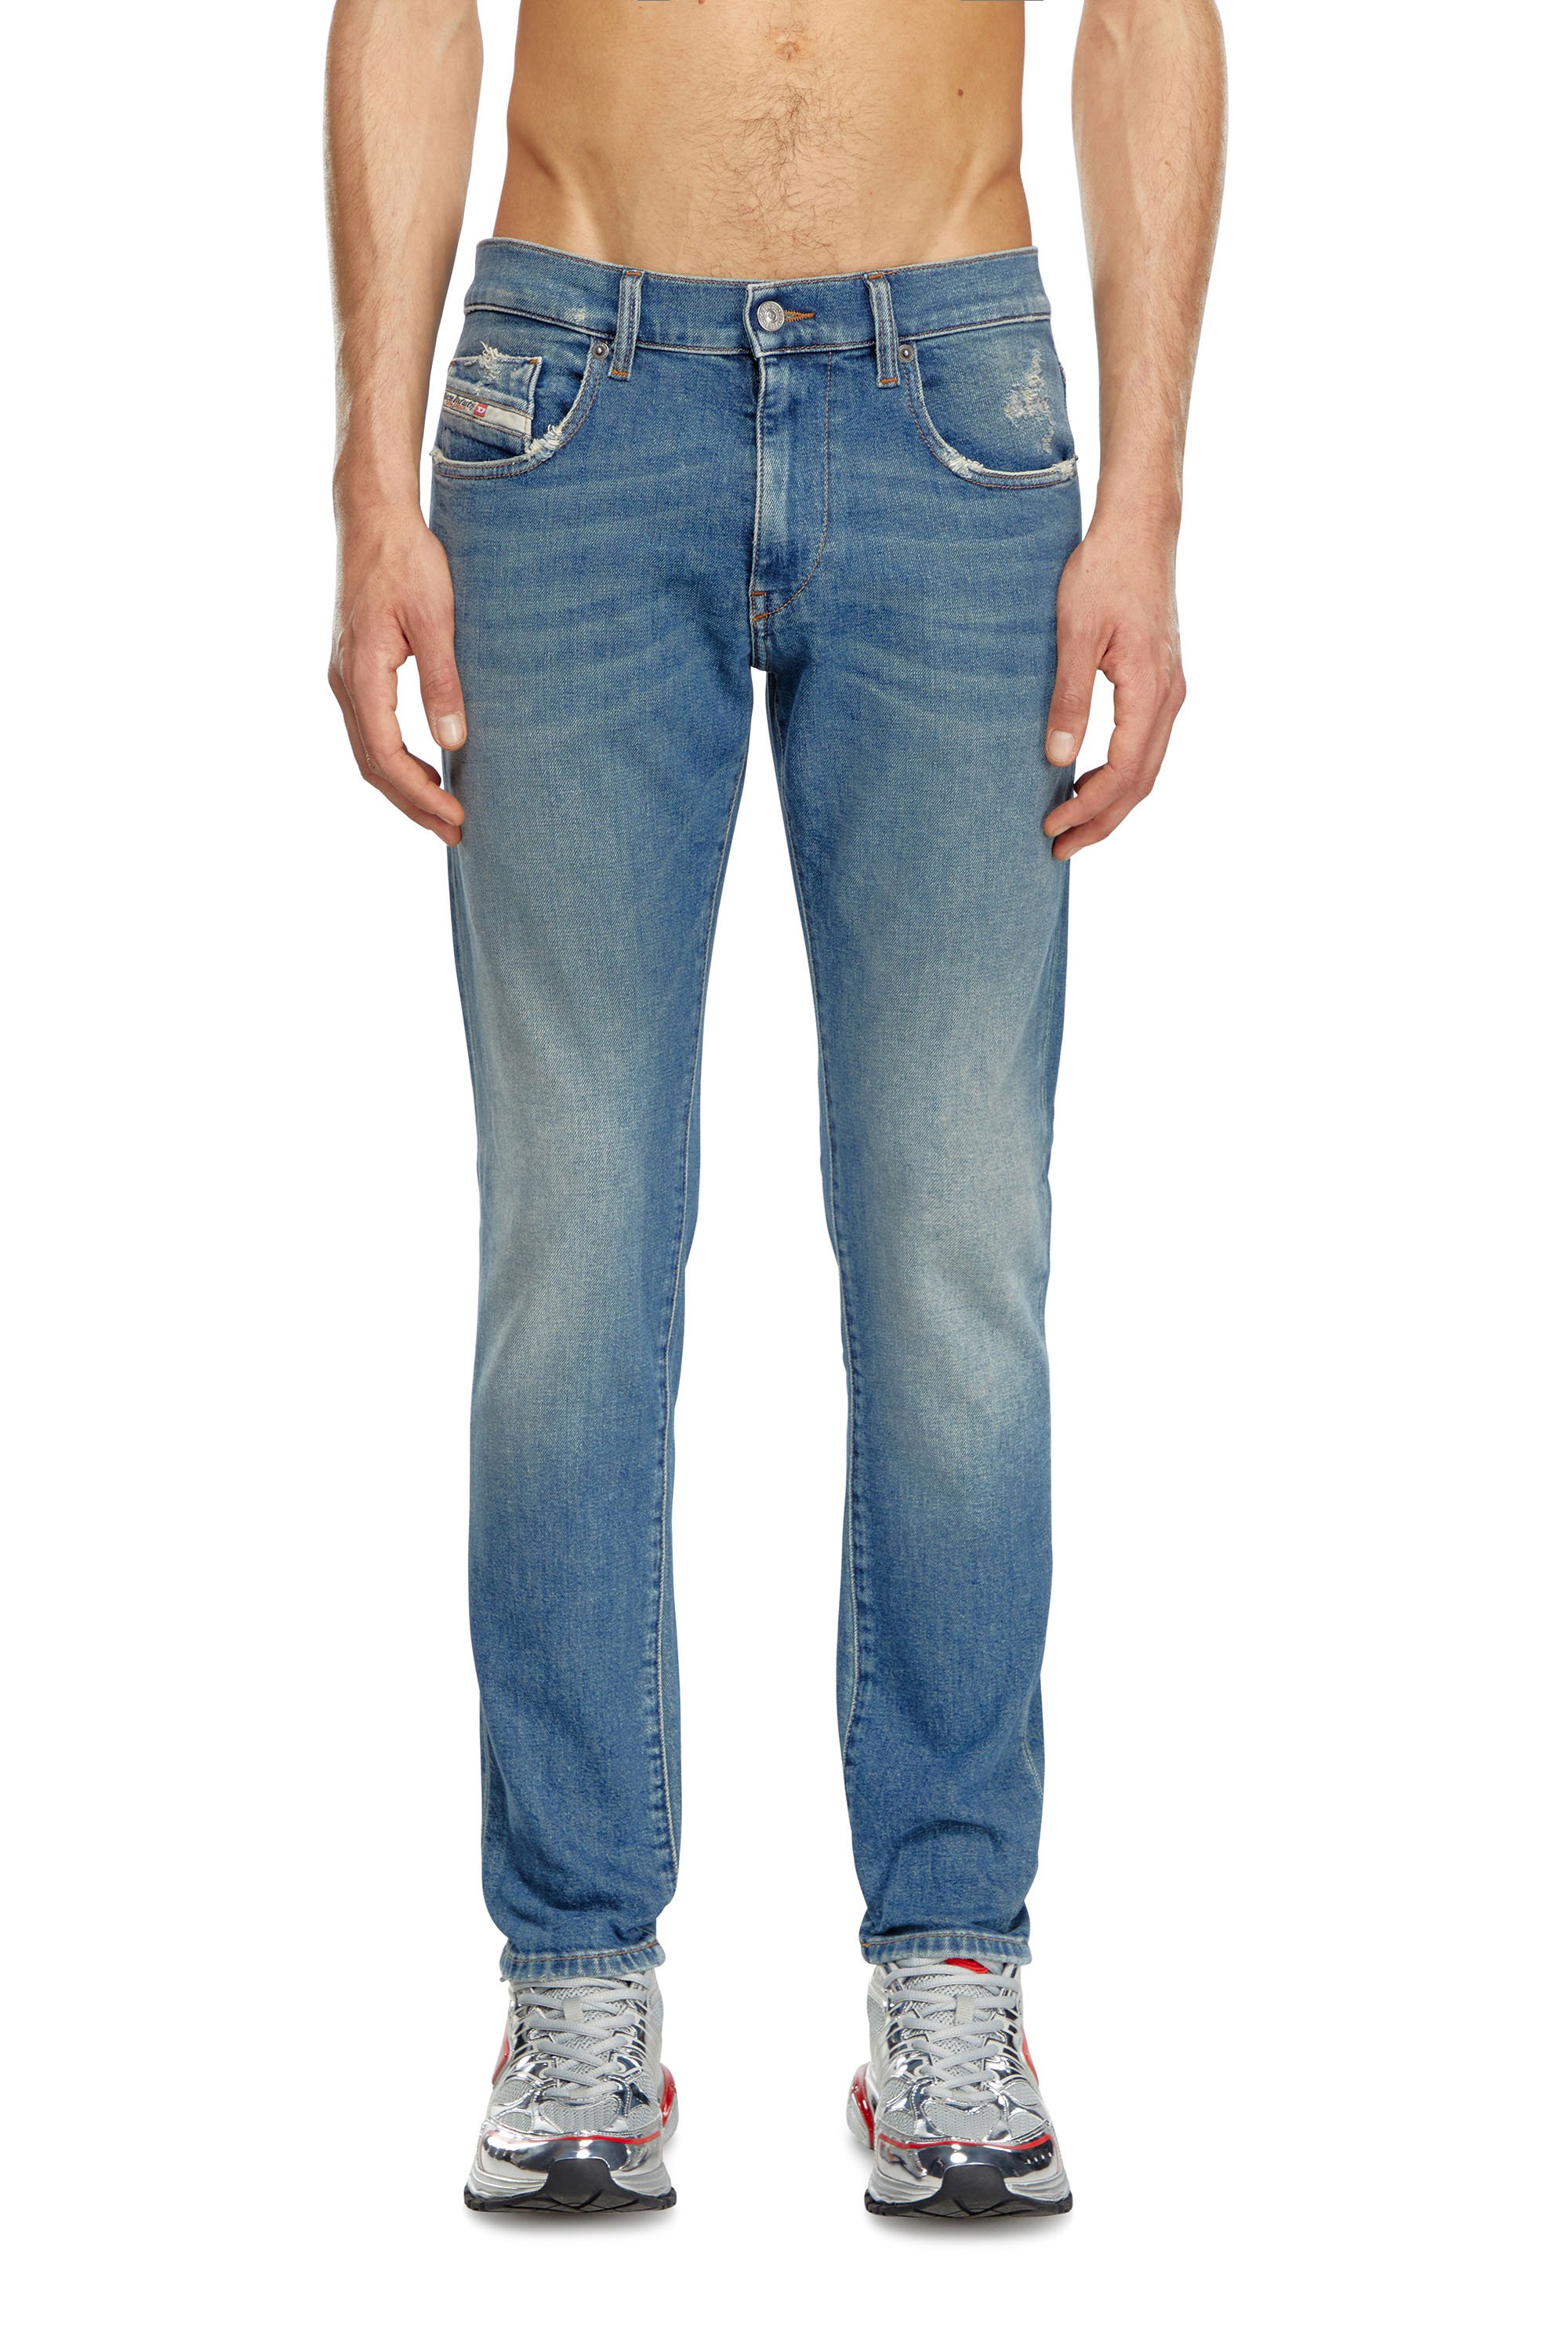 Diesel - Slim Jeans 2019 D-Strukt 0GRDG, Hombre Slim Jeans - 2019 D-Strukt in Azul marino - Image 1